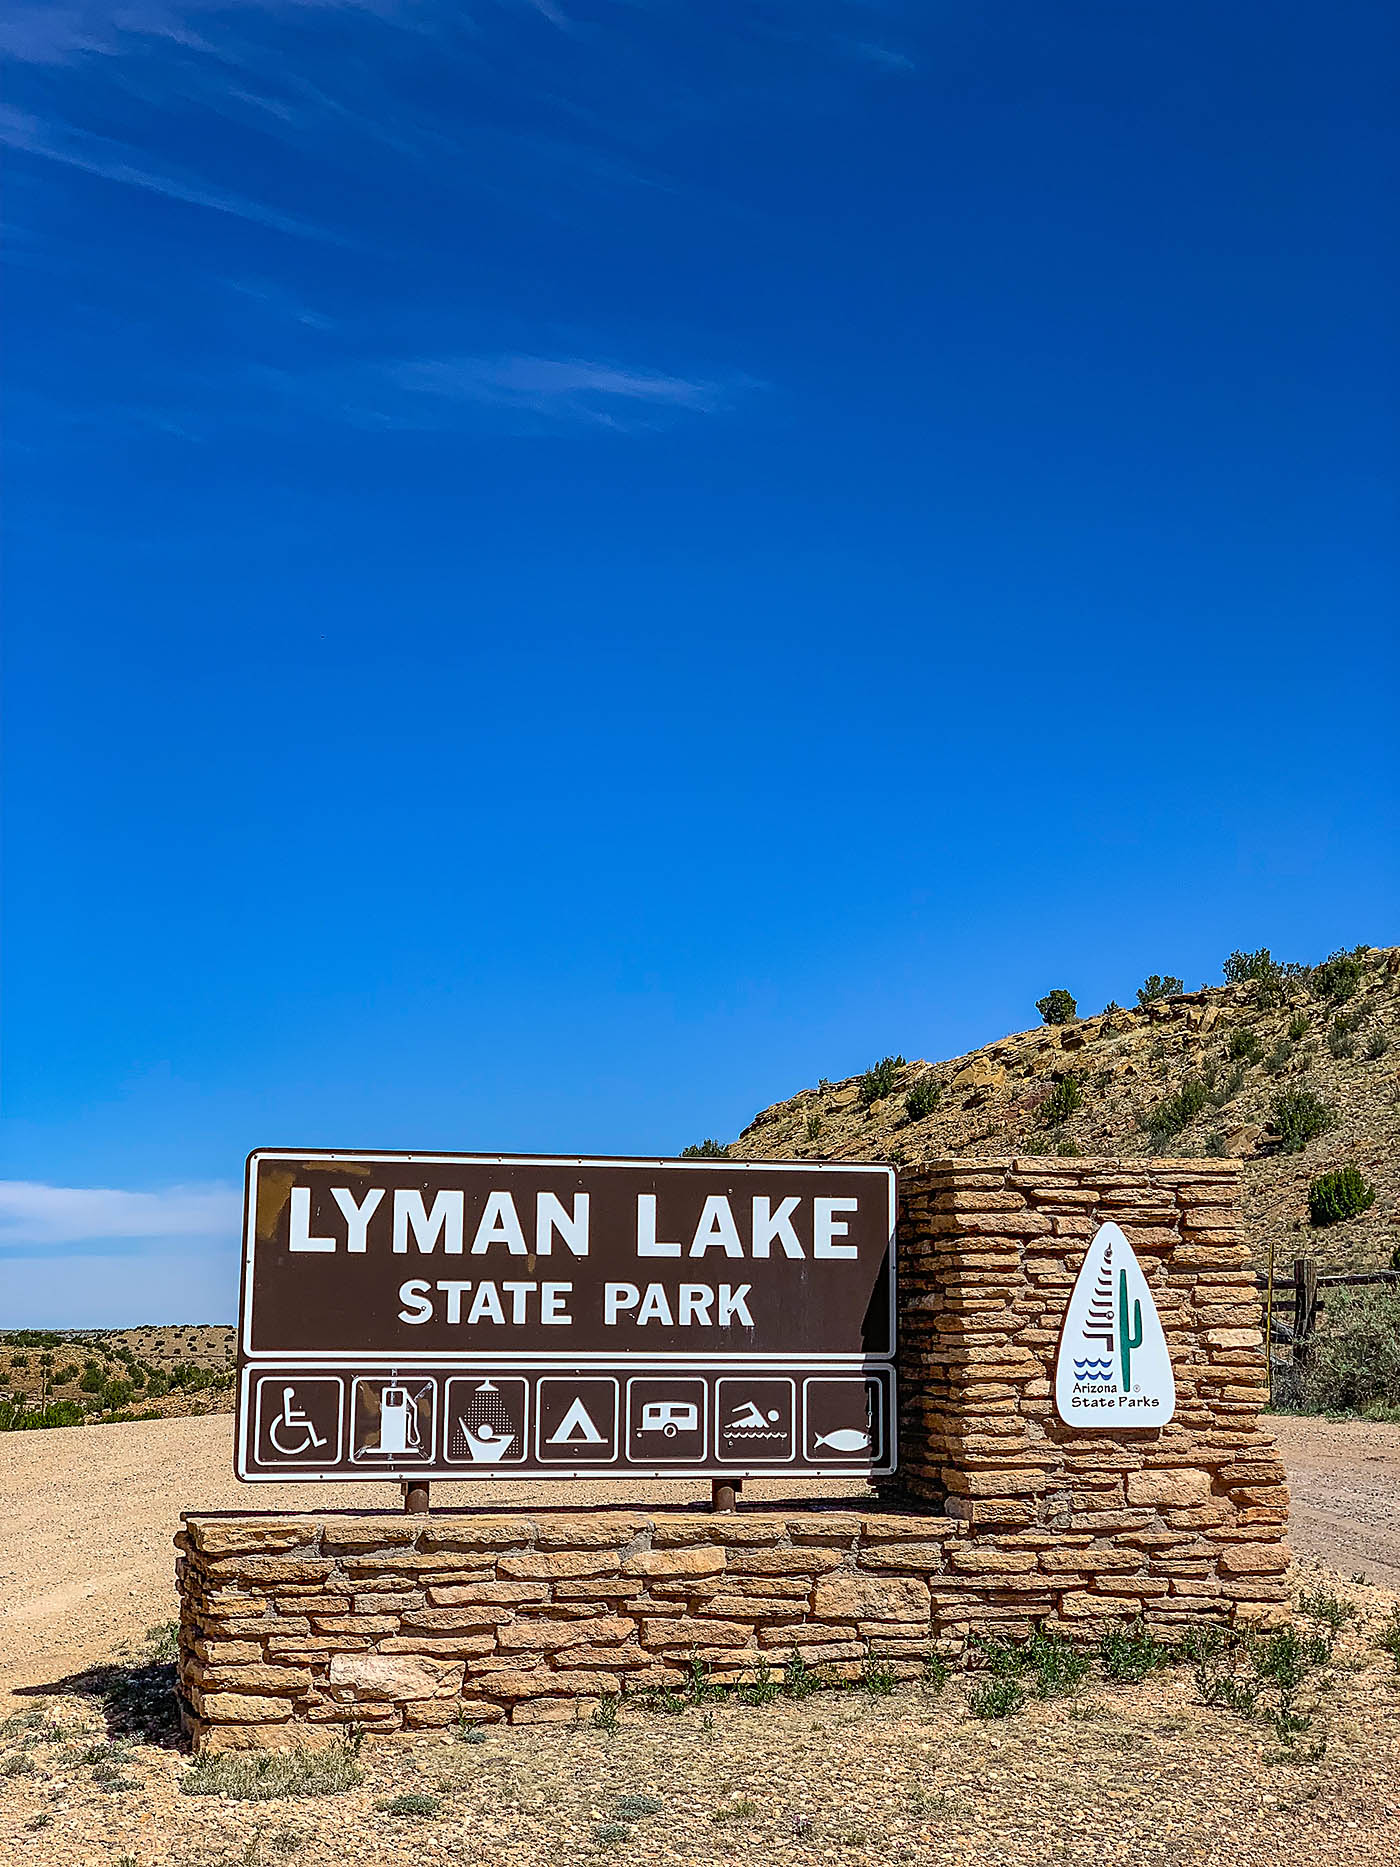 What to do at Lyman Lake - an Arizona State Park